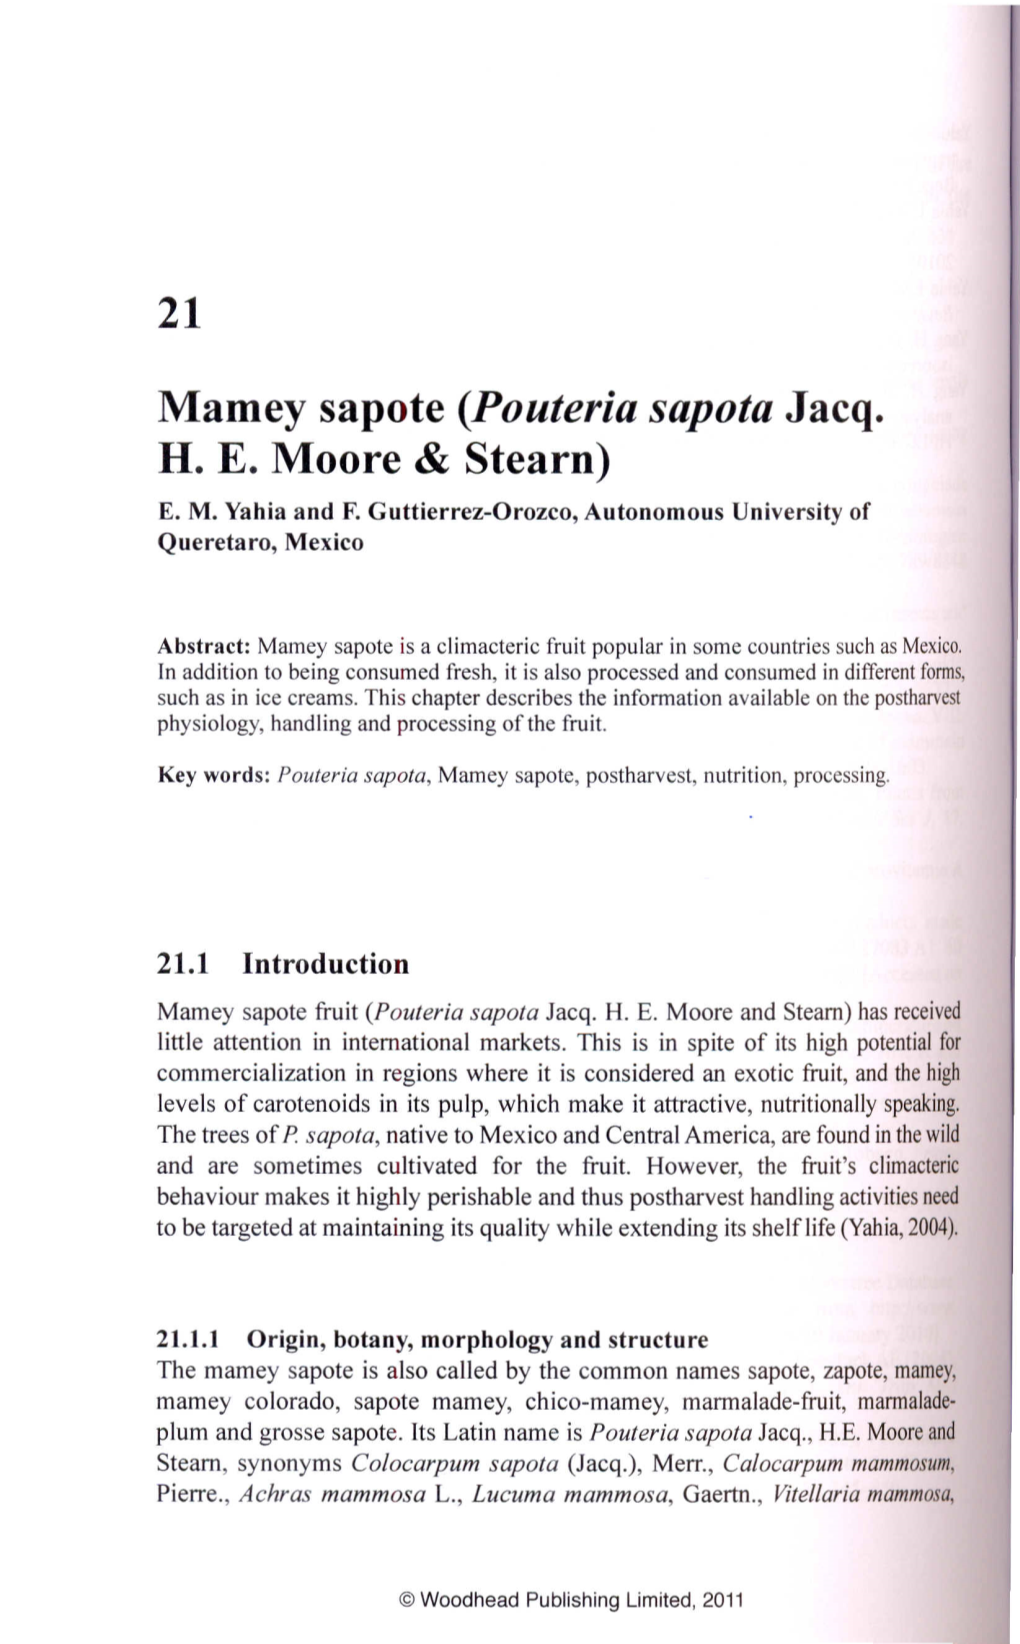 Marney Sapote (Pouteria Sapota Jacq. H